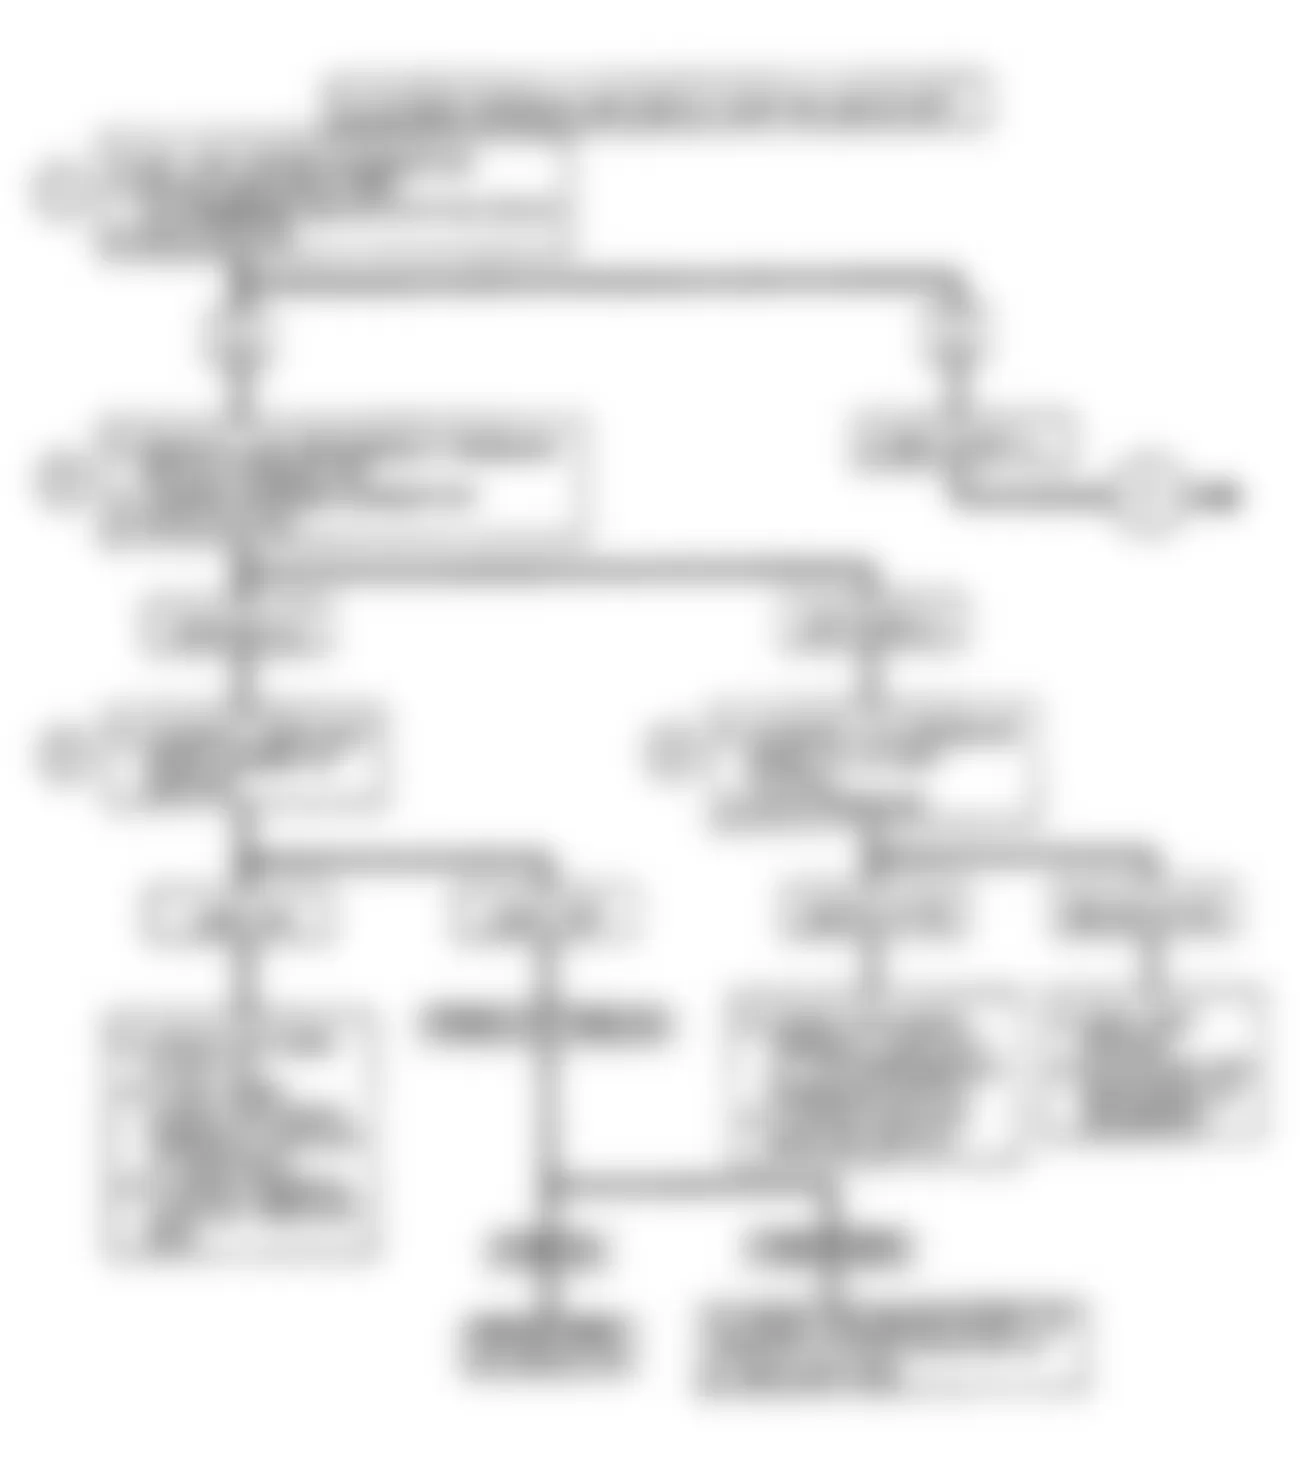 Buick Riviera 1990 - Component Locations -  Code B446, B447 & B448: Flow Chart Refrigerant System Problem (1 of 2)